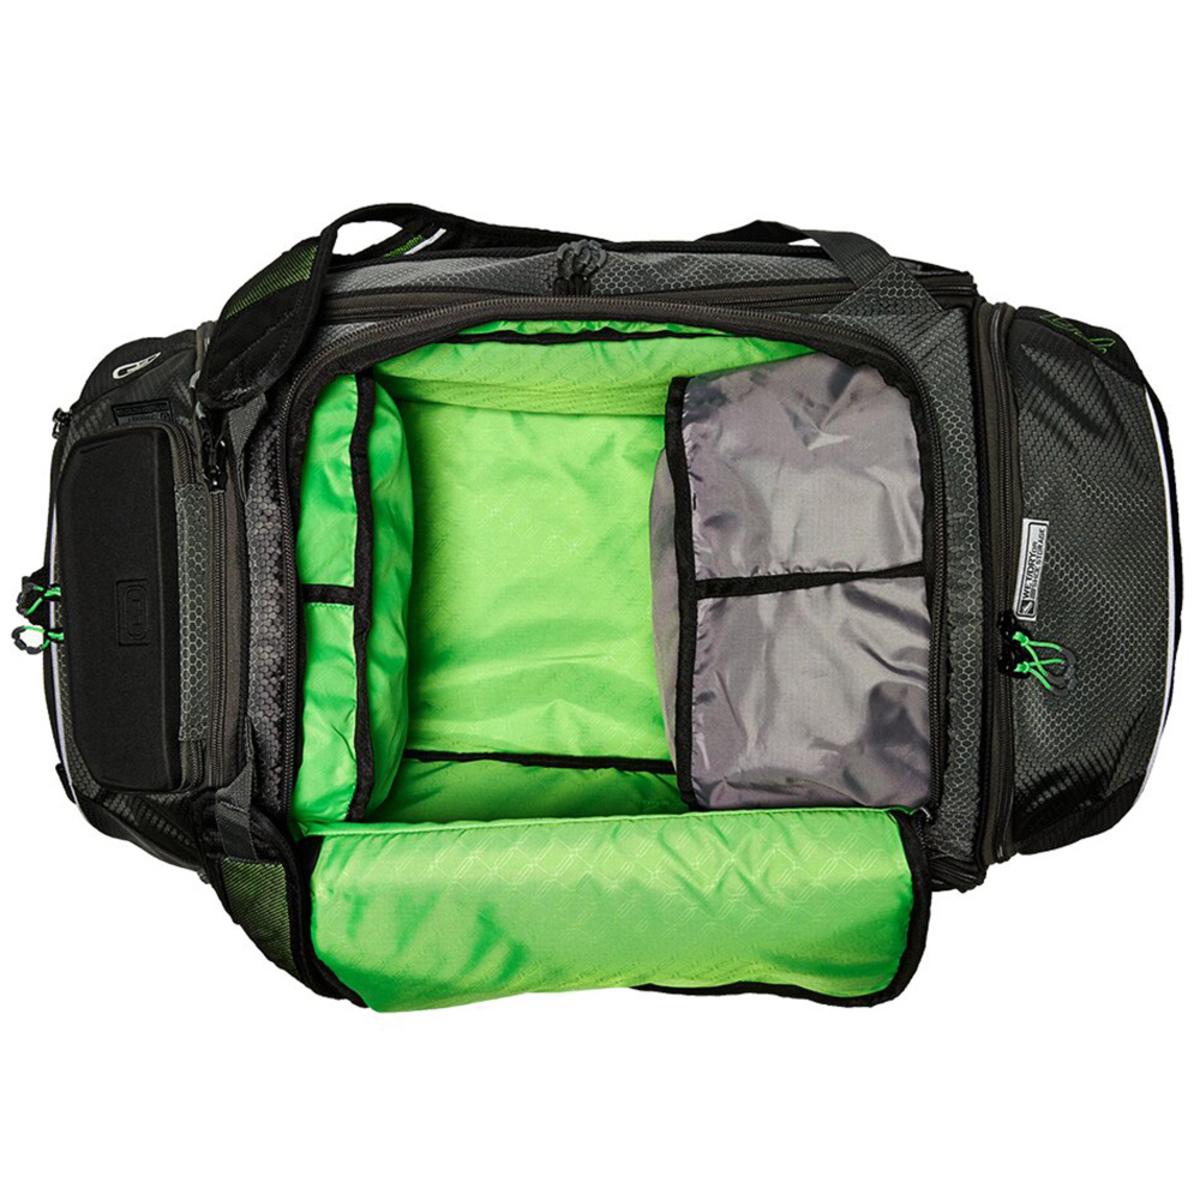 Ogio Endurance 9.0 Travel Duffel Bag